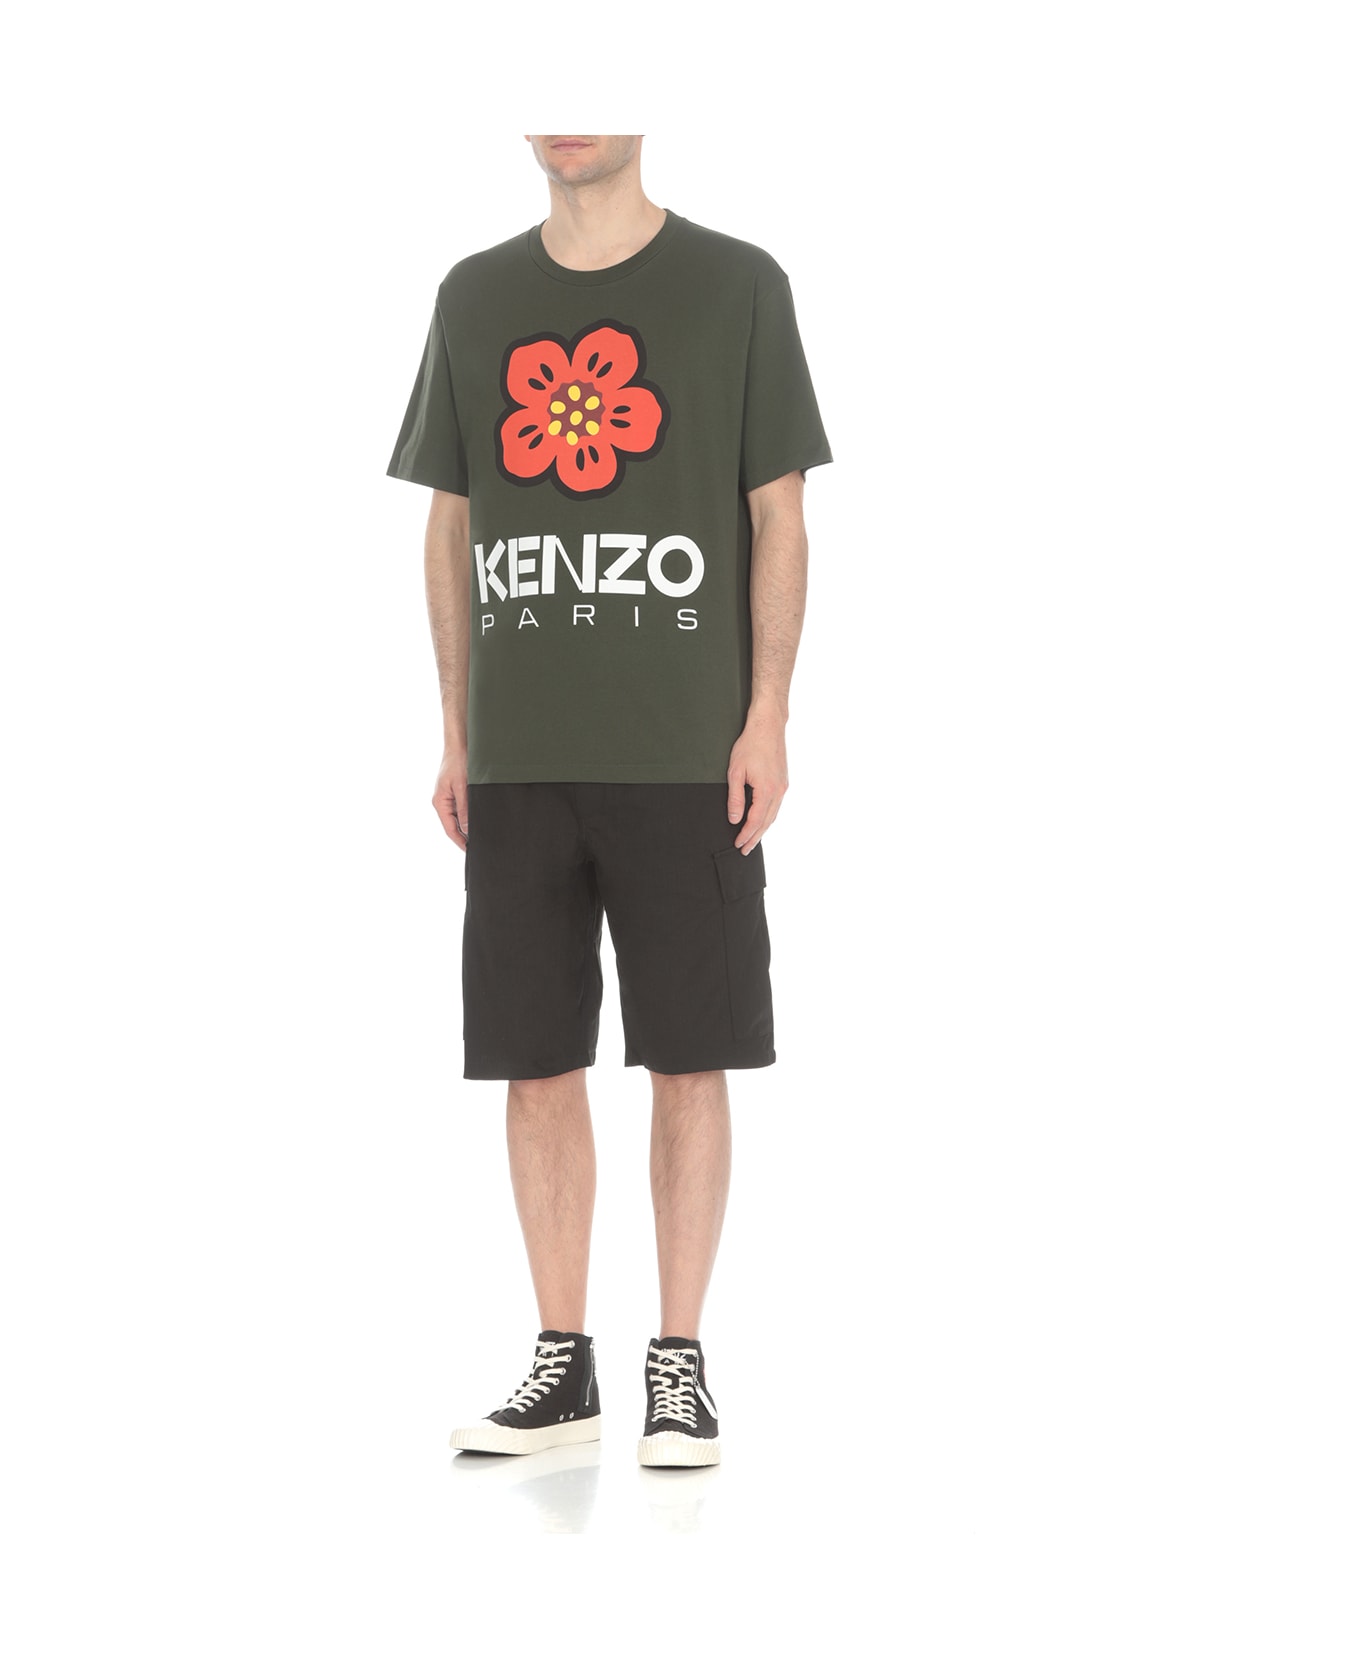 Kenzo Boke Flower T-shirt - Green